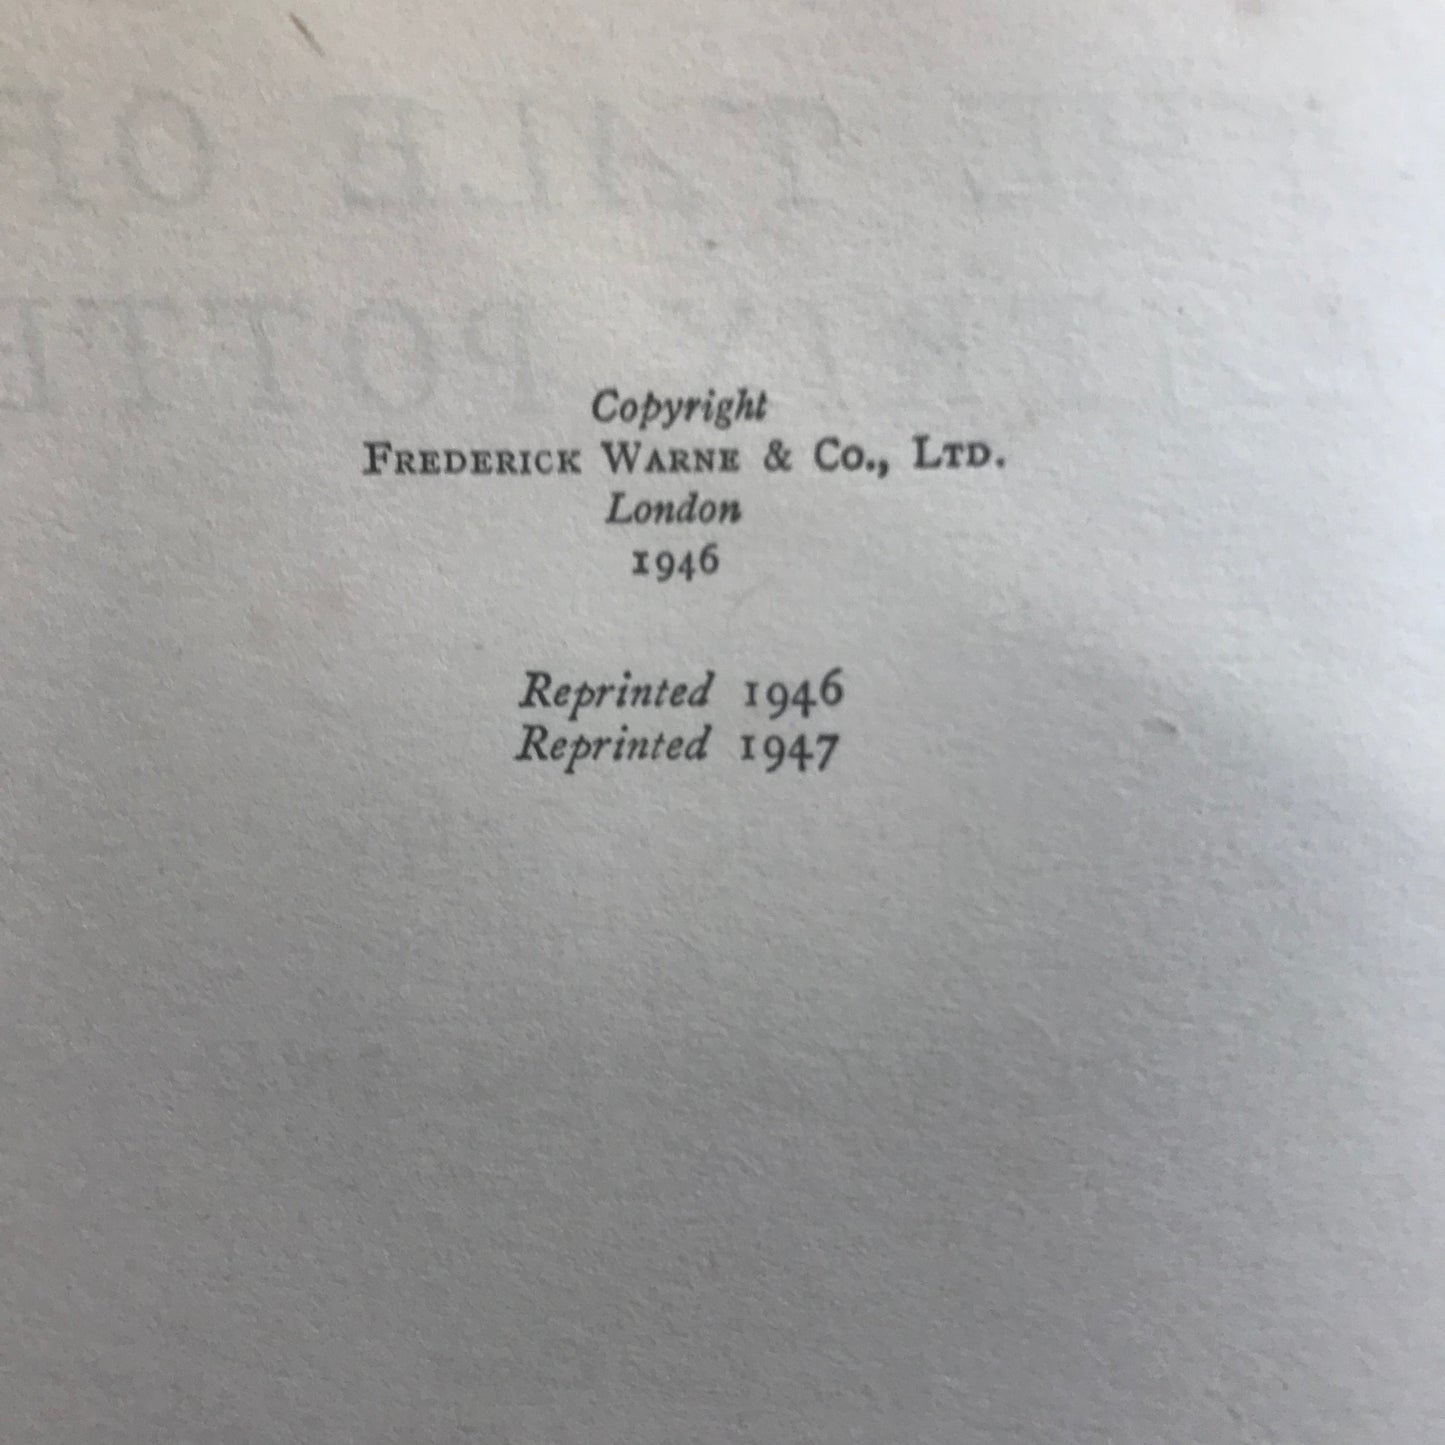 1947 The Tale Of Beatrix Potter A Biography - Margaret Lane(Frederick Warne & Co Ltd)